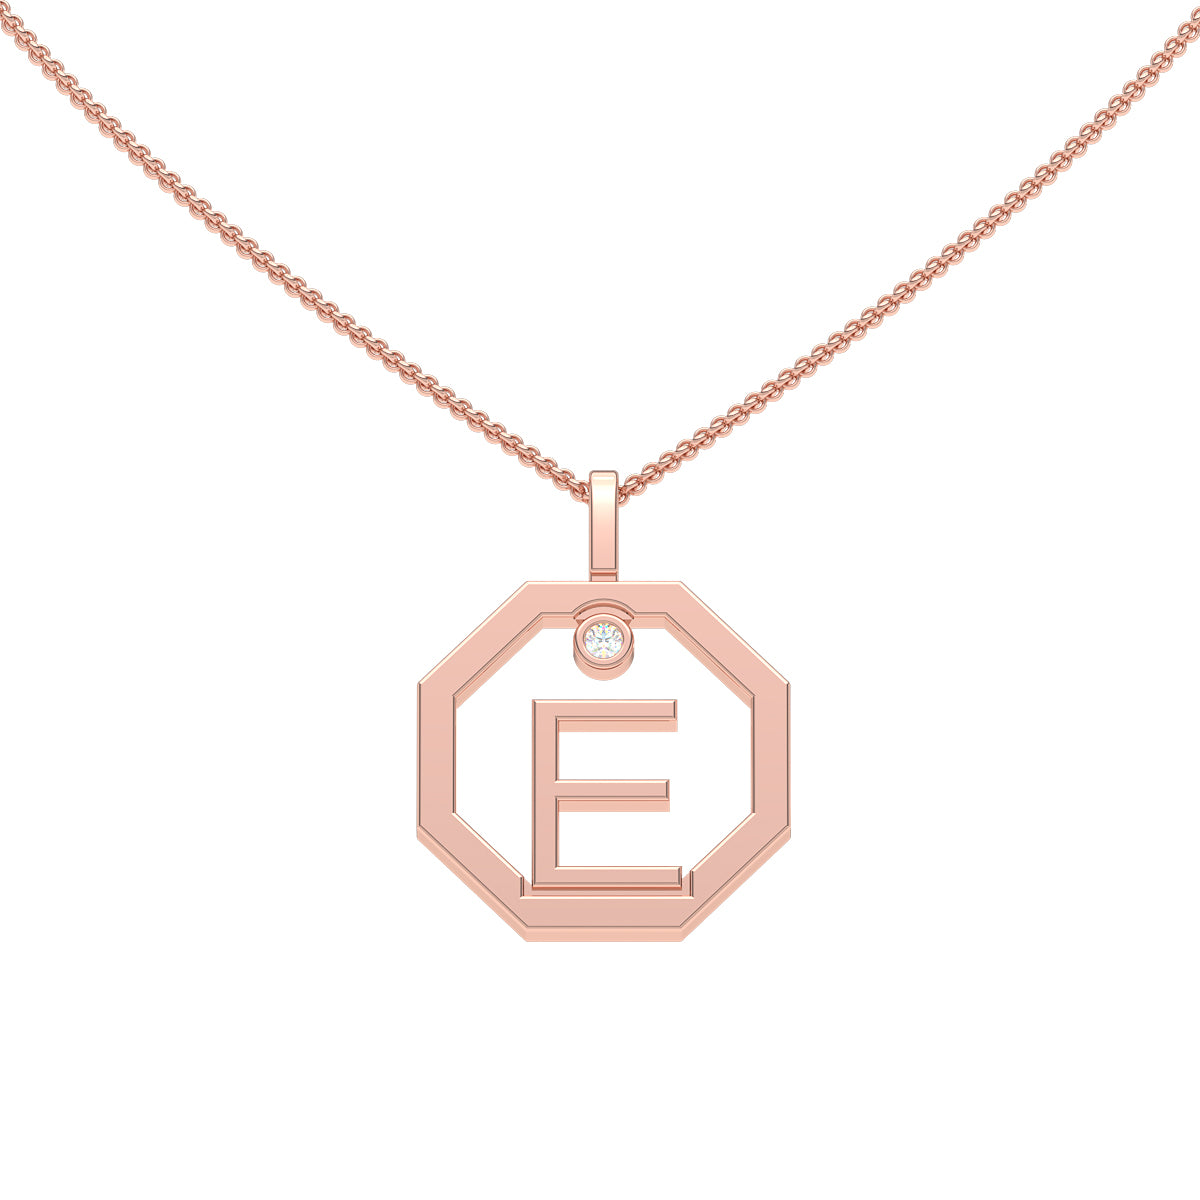 Personalised-Initial-E-diamond-rose-gold-pendant-by-Sydney-jewellers-Lizunova